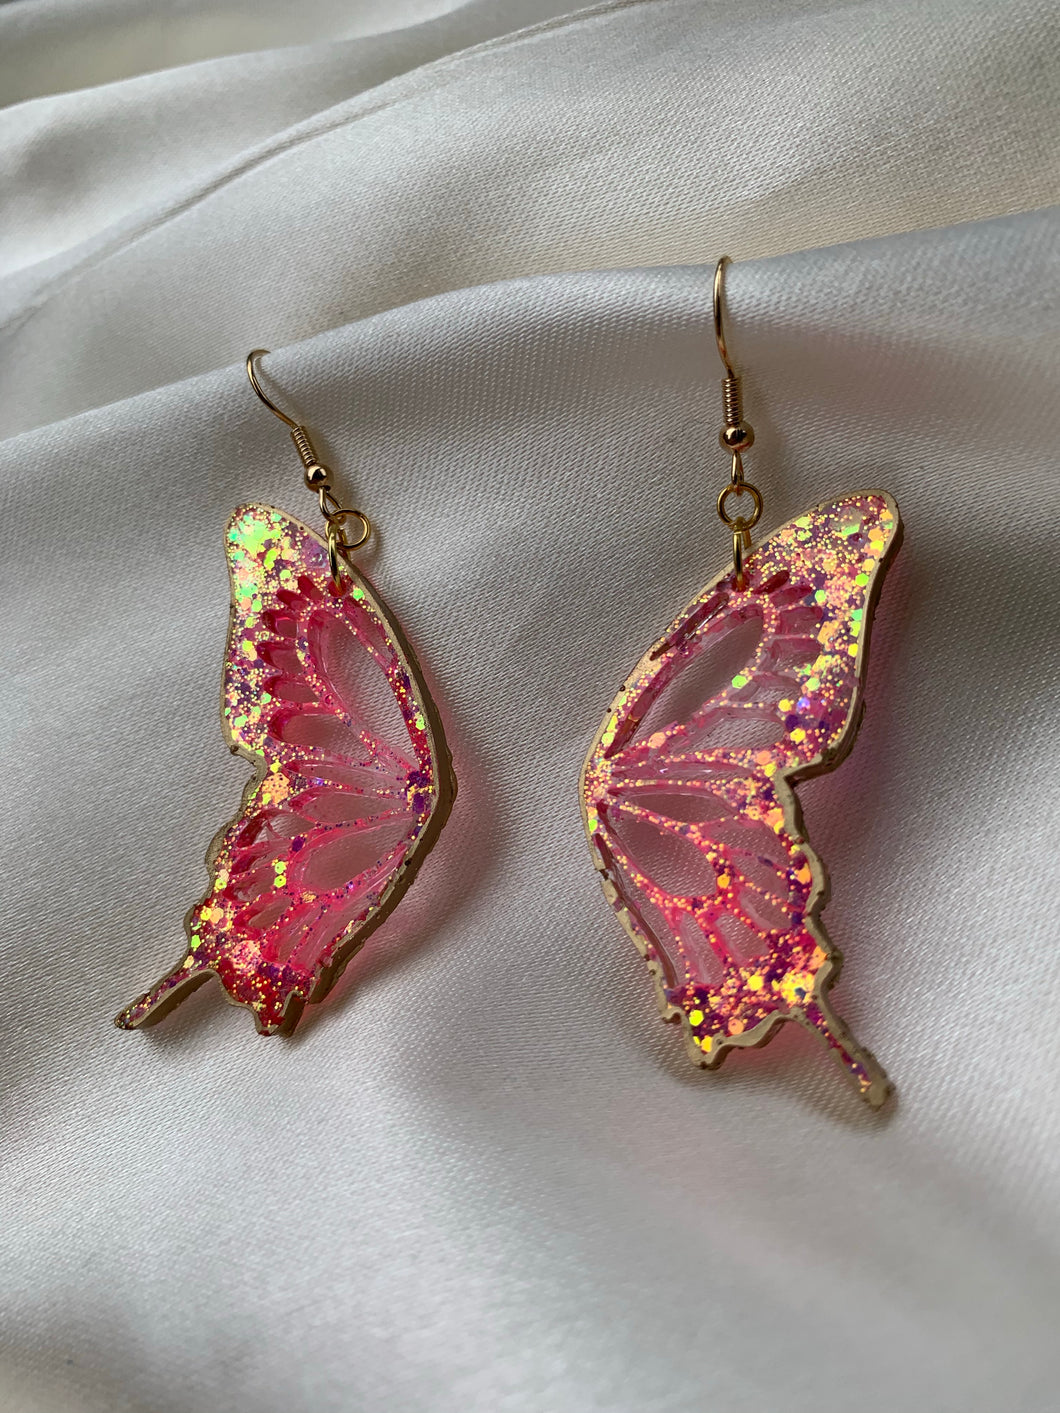 Pink butterfly earrings lined in gold